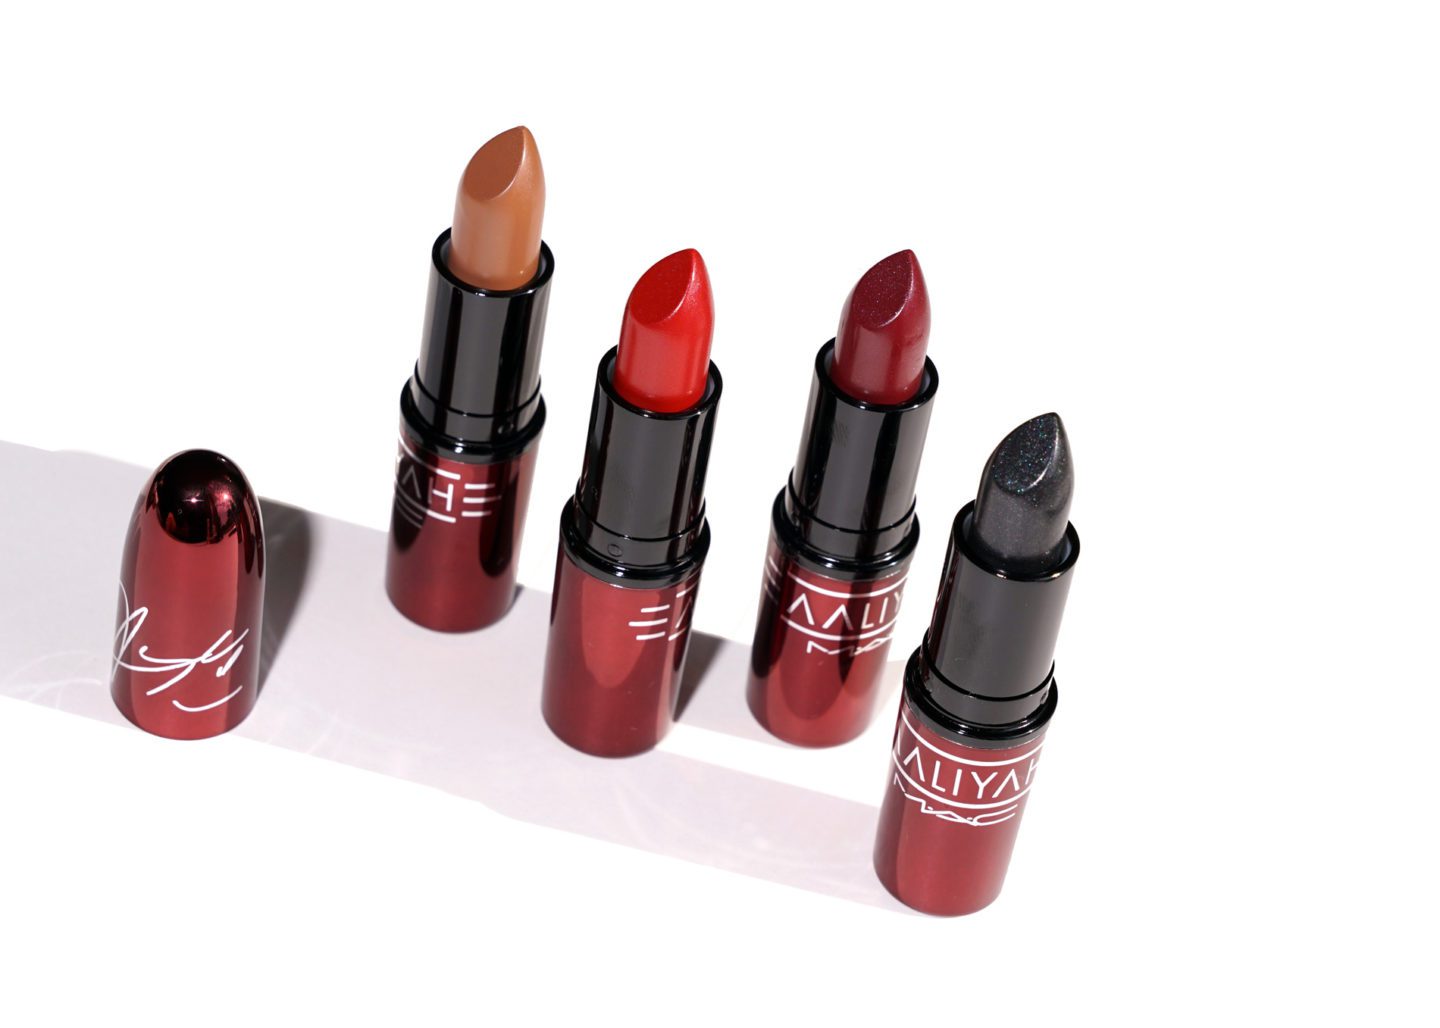 MAC Aaliyah Lipsticks | The Beauty Look Book